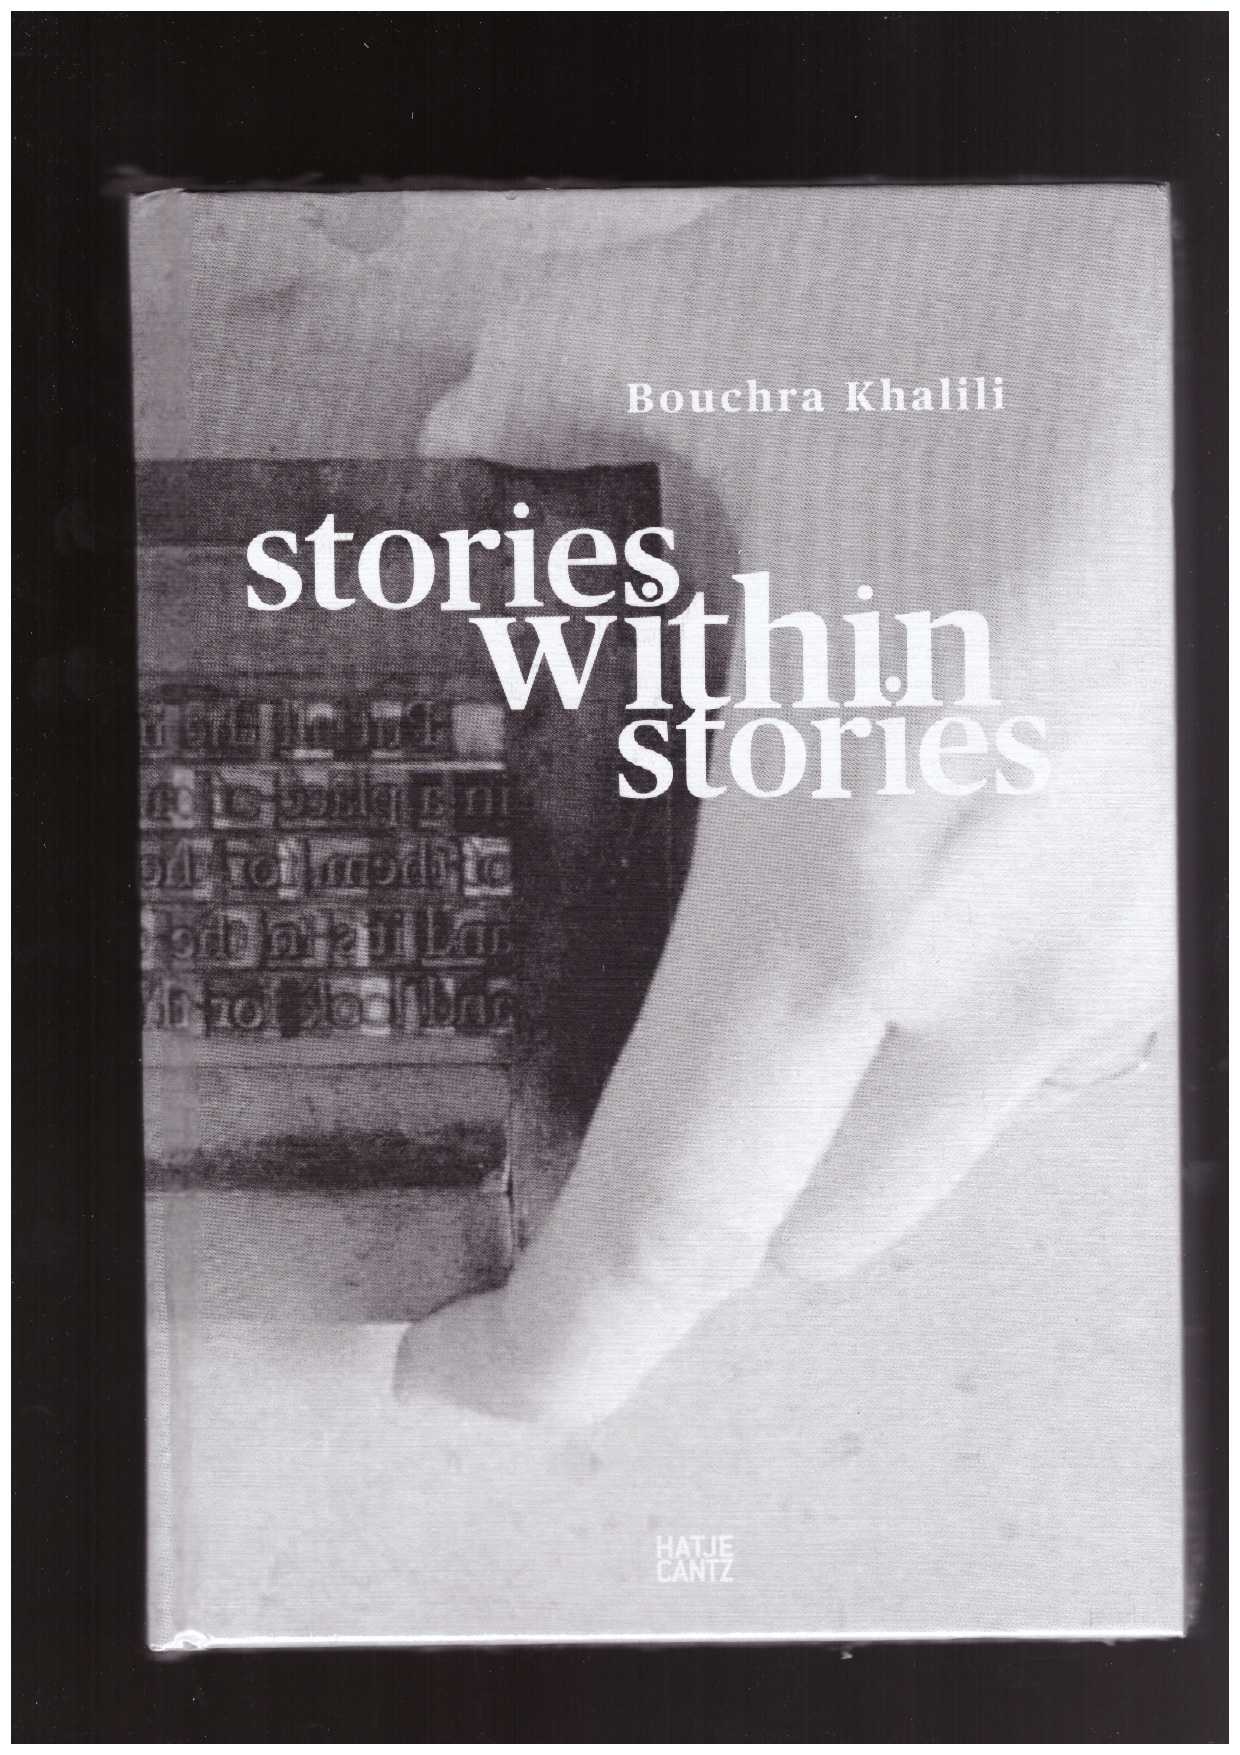 JOHANSSON, Sofia (ed) - Bouchra Khalili. Stories Within Stories